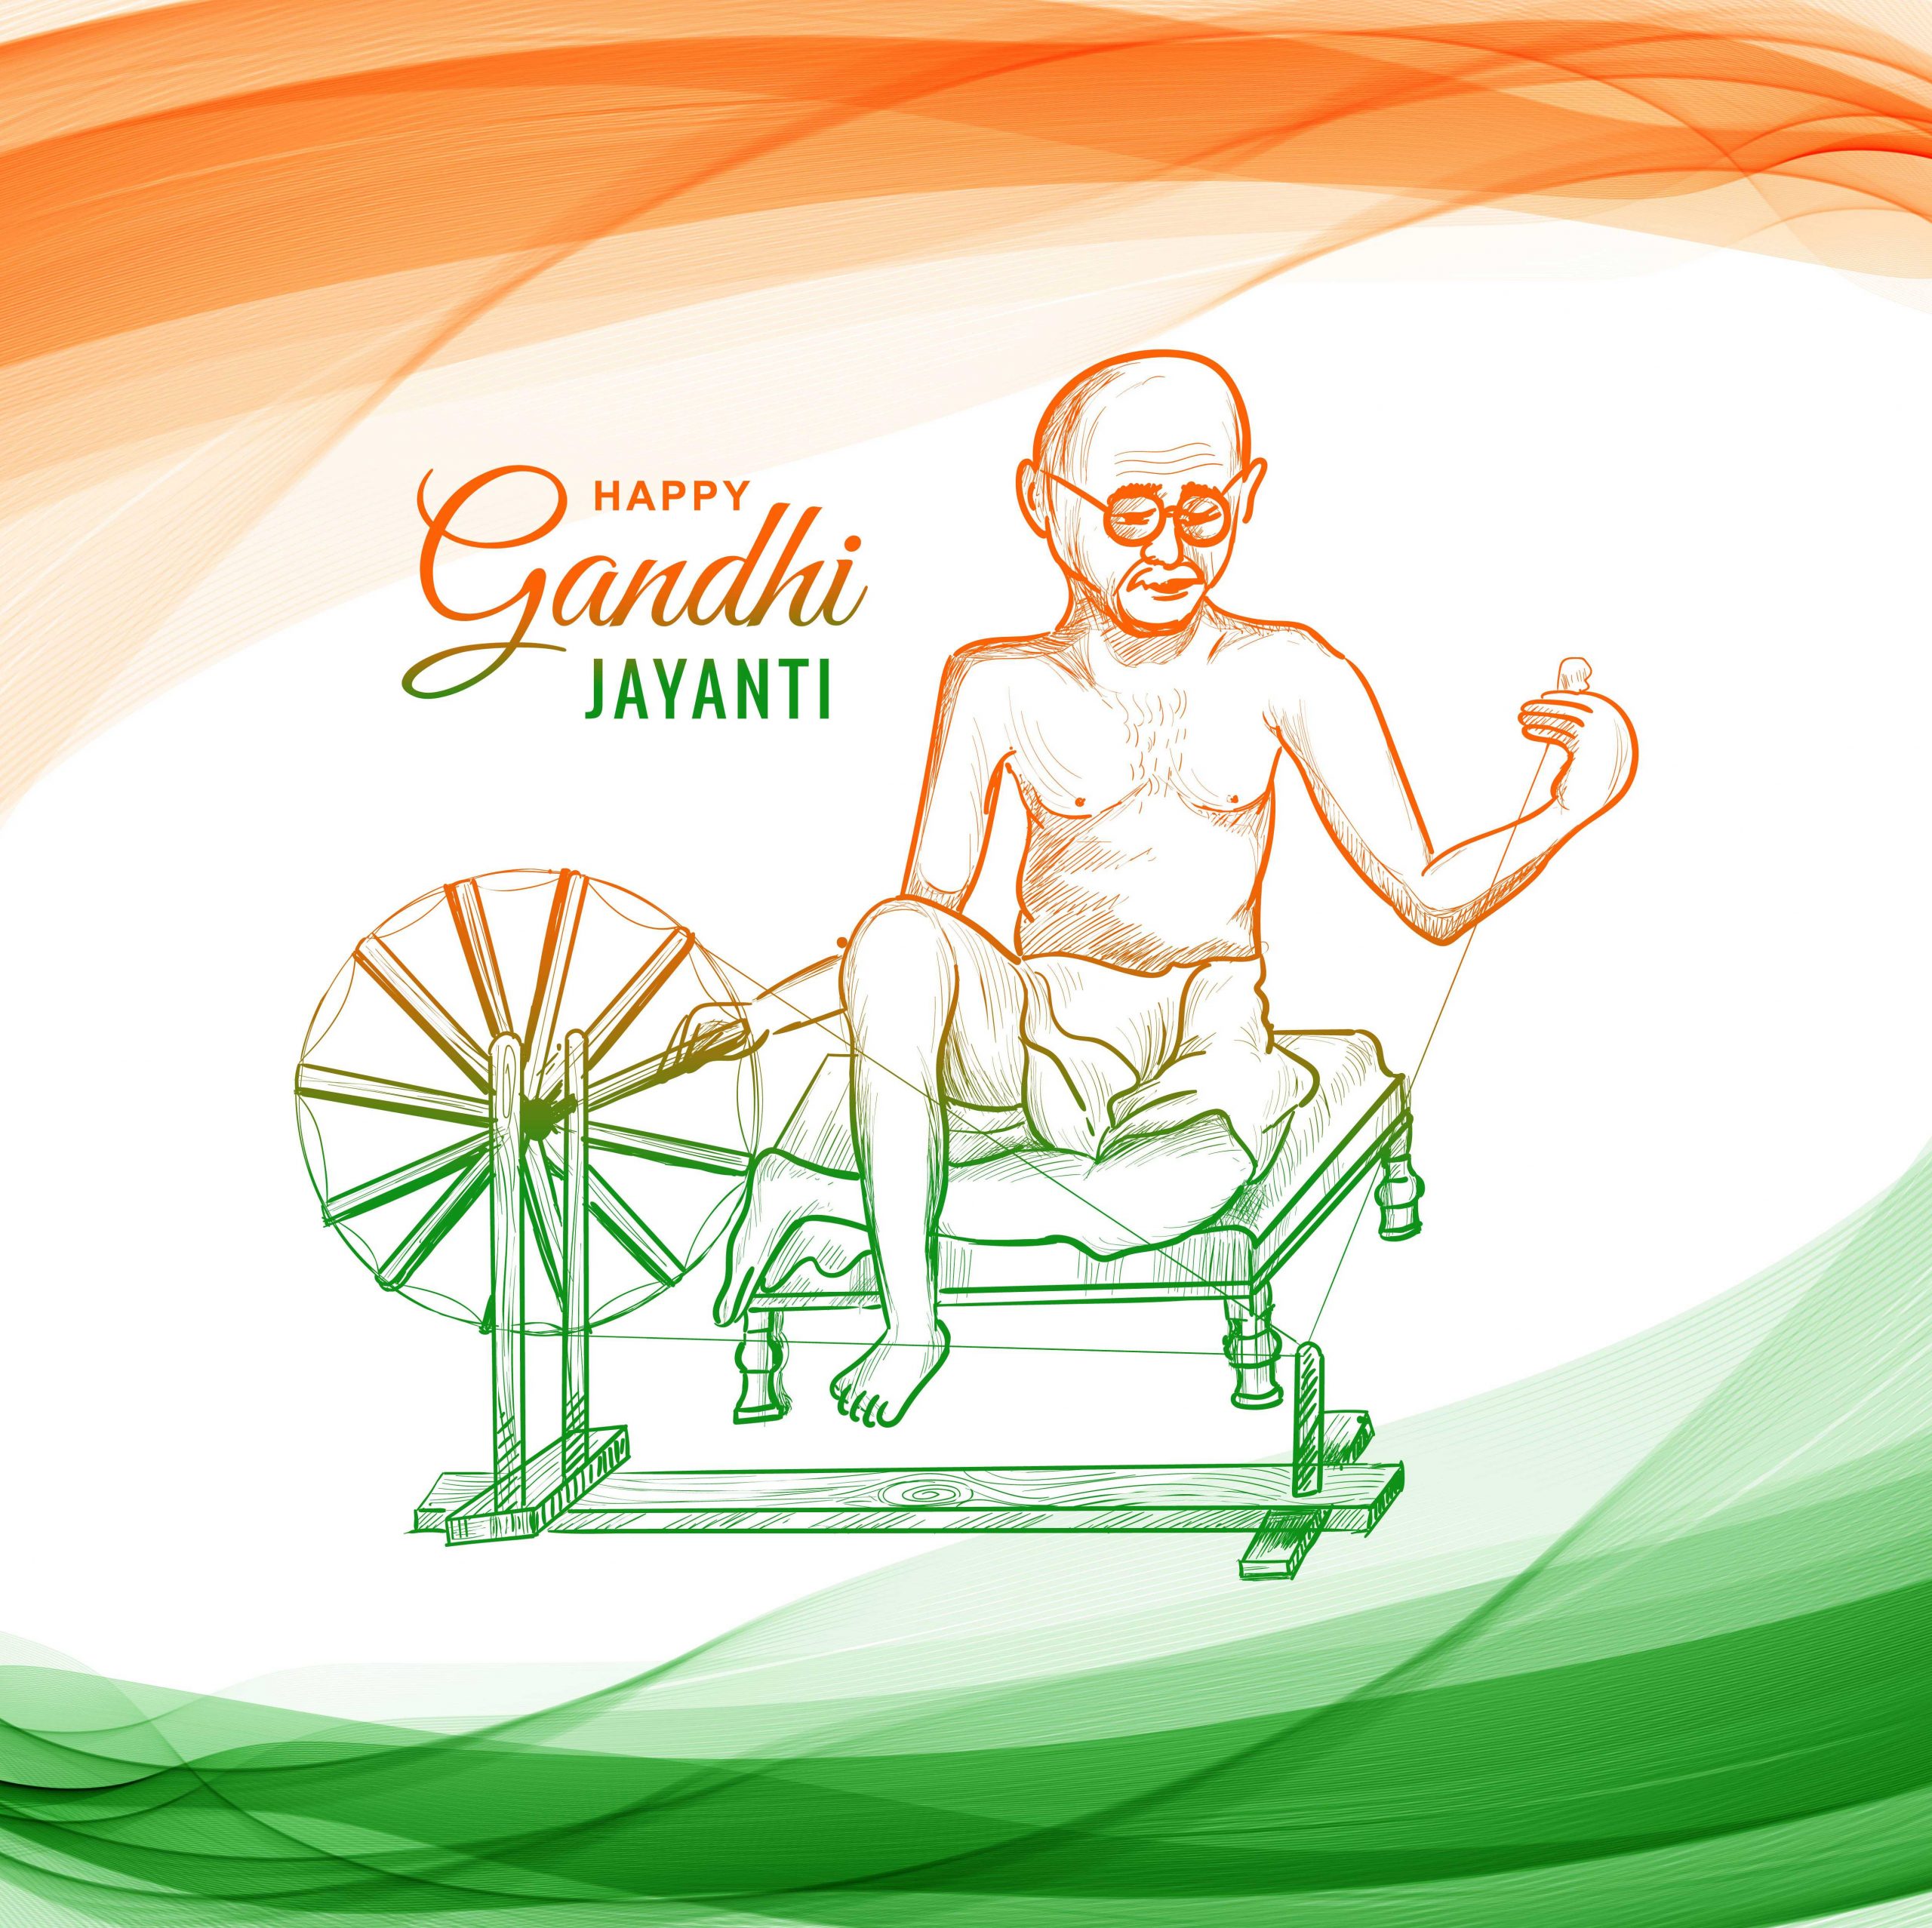 Happy Mahatma Gandhi Jayanti photo